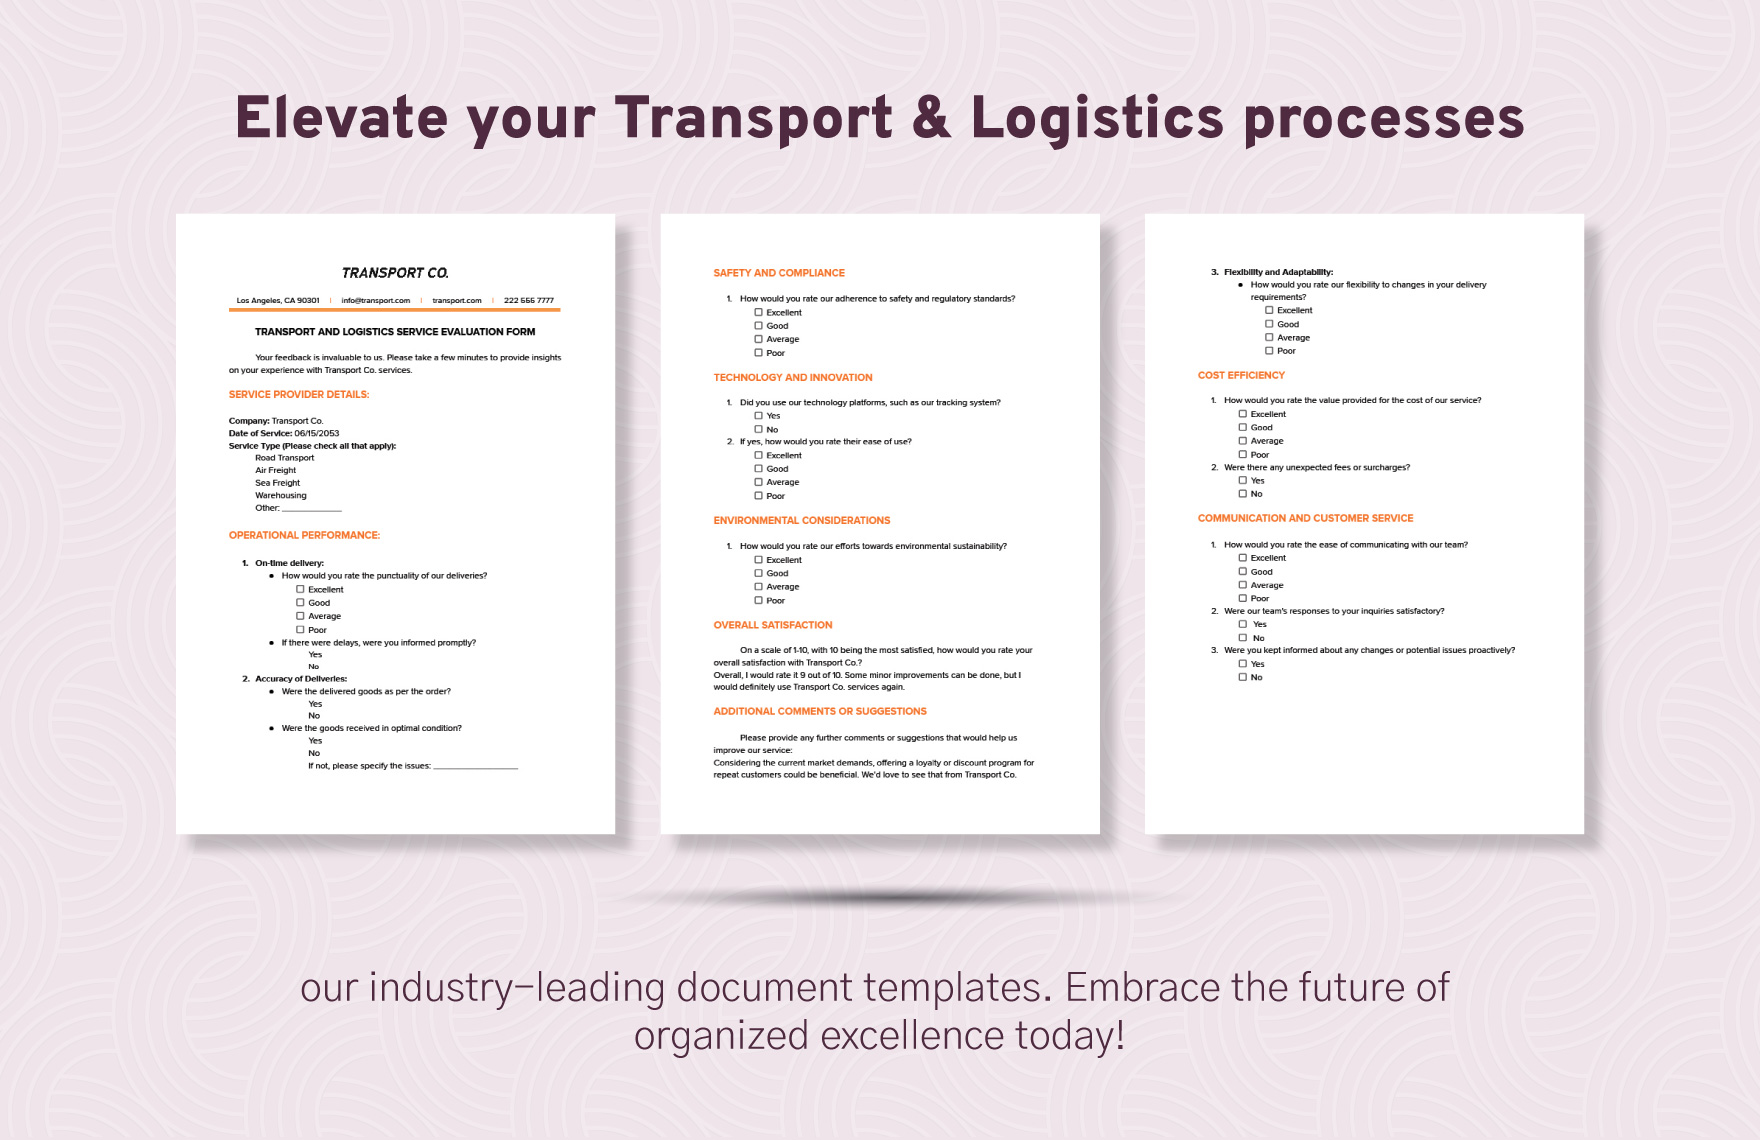 Transport and Logistics Service Evaluation Form Template